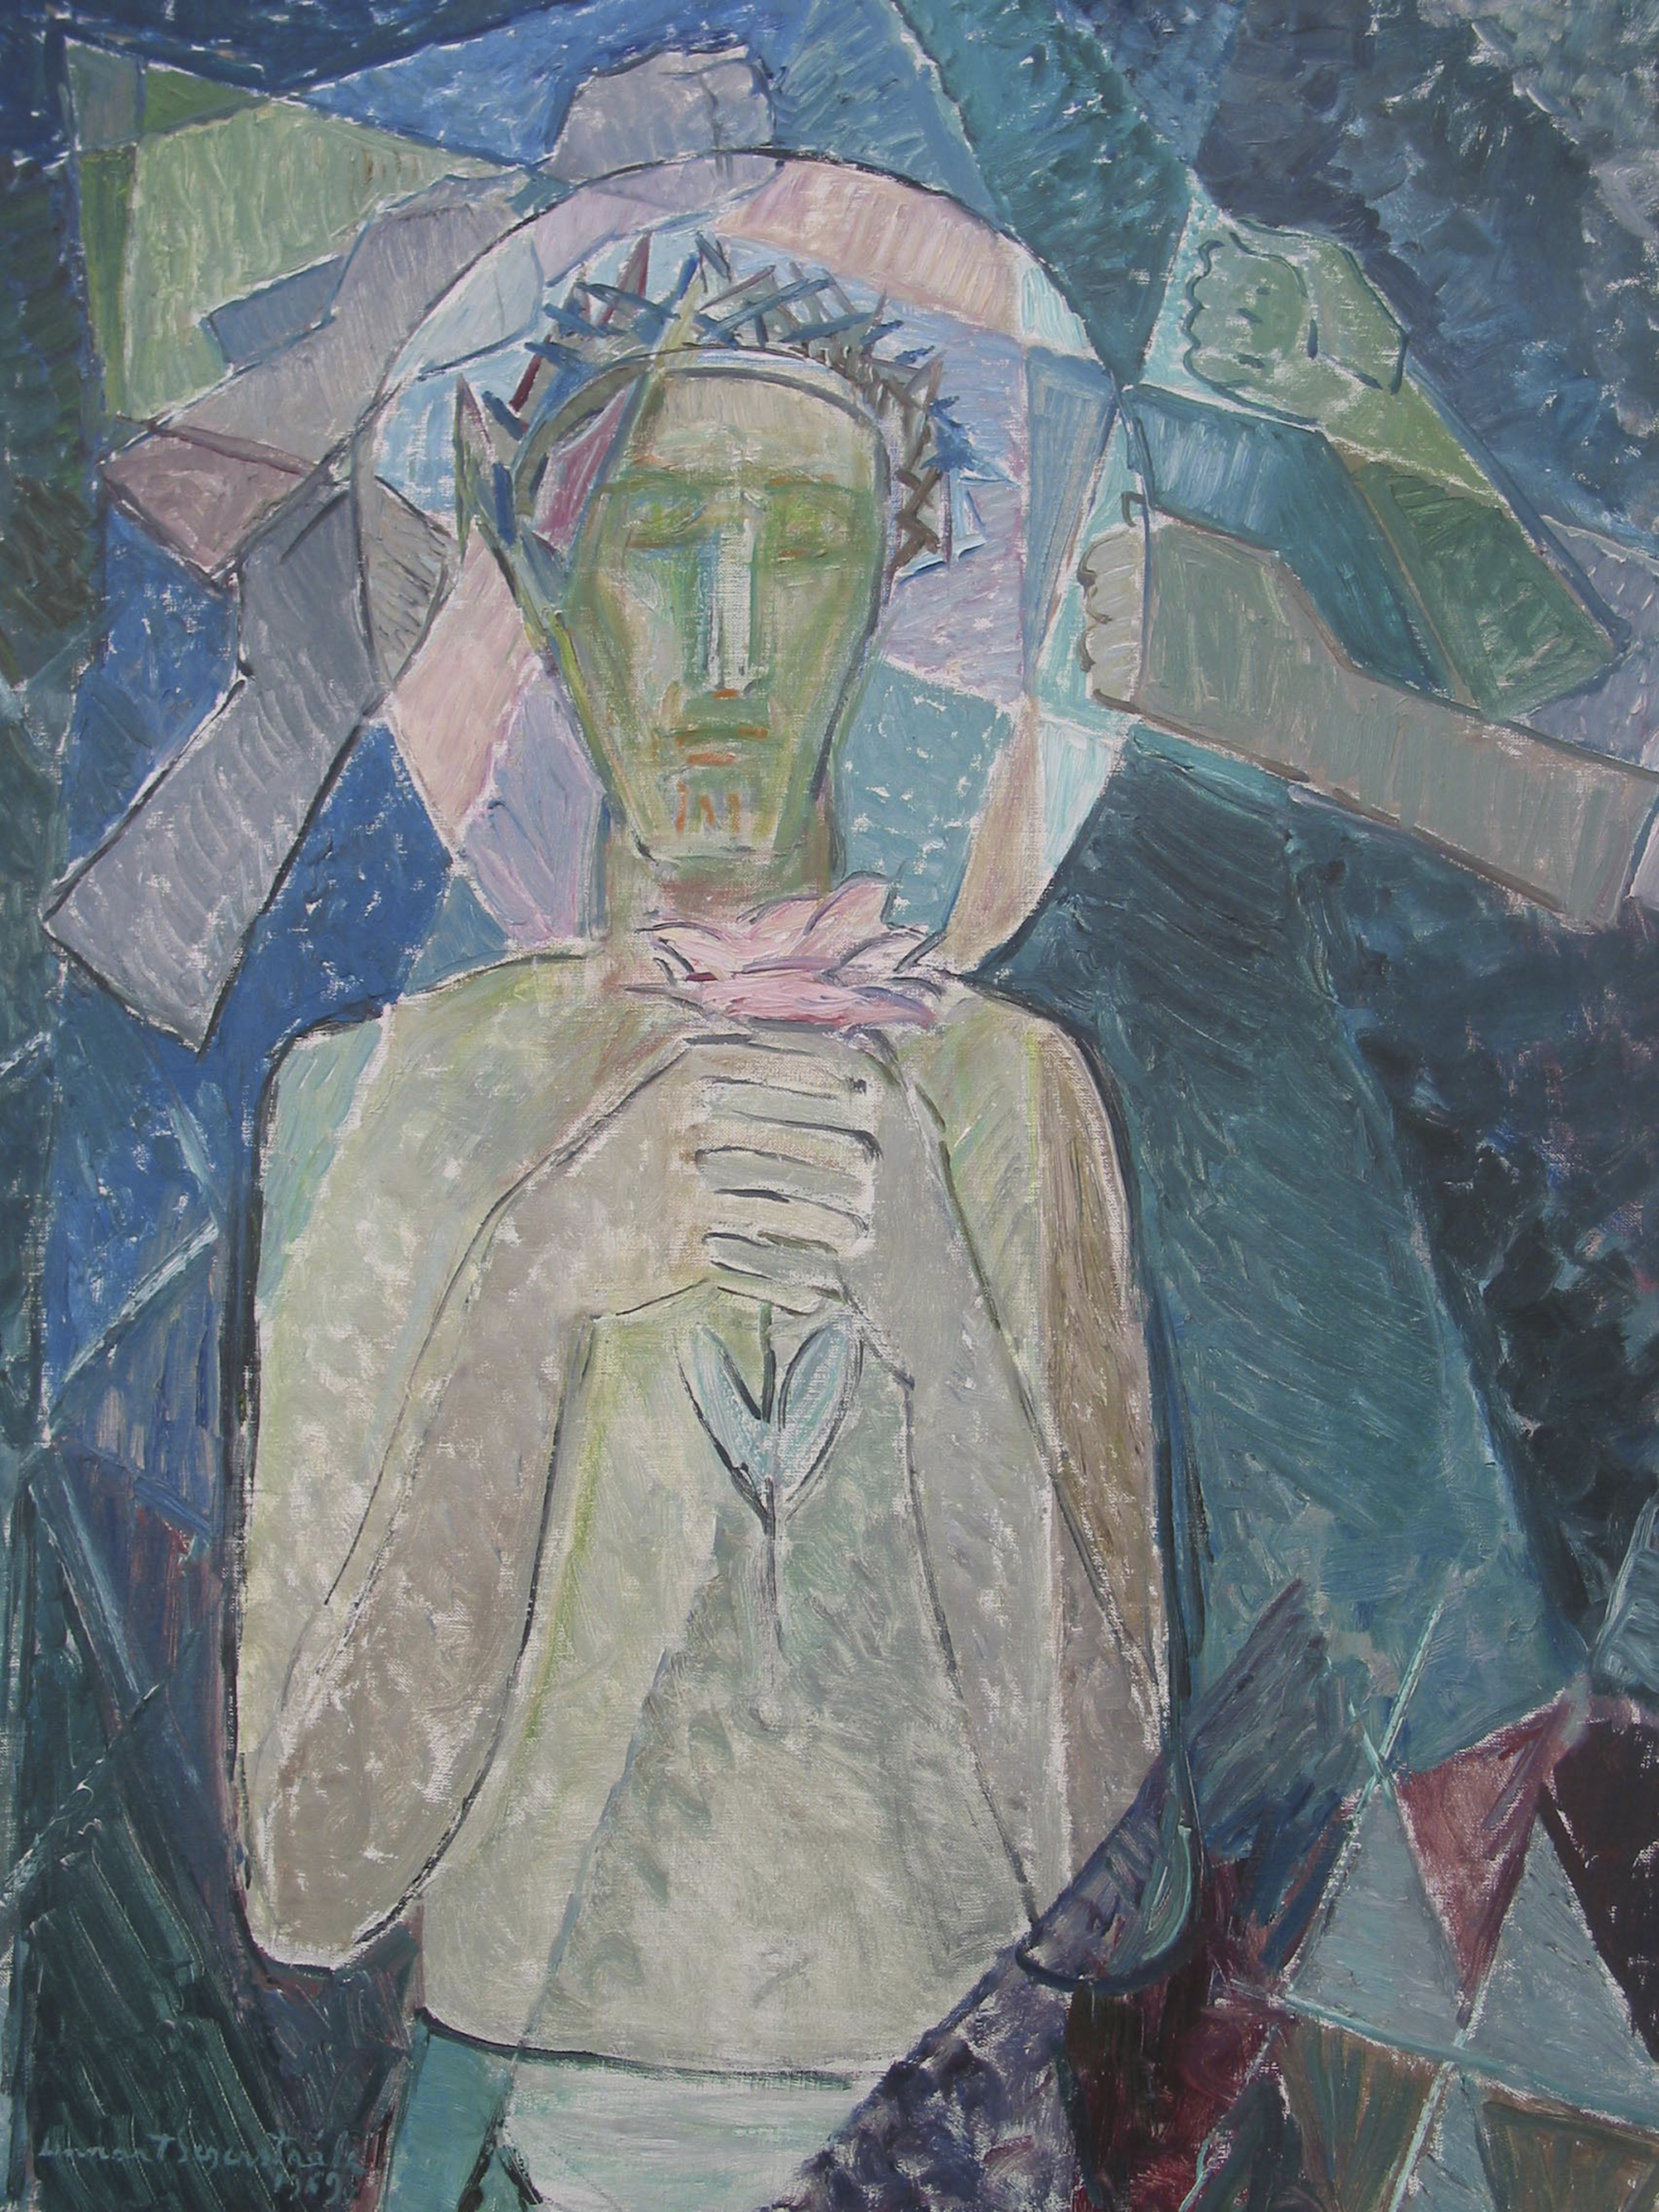 Vapahtaja - Försonaren
ölymaalaus/oljemålning 102 x 82 cm, 1969